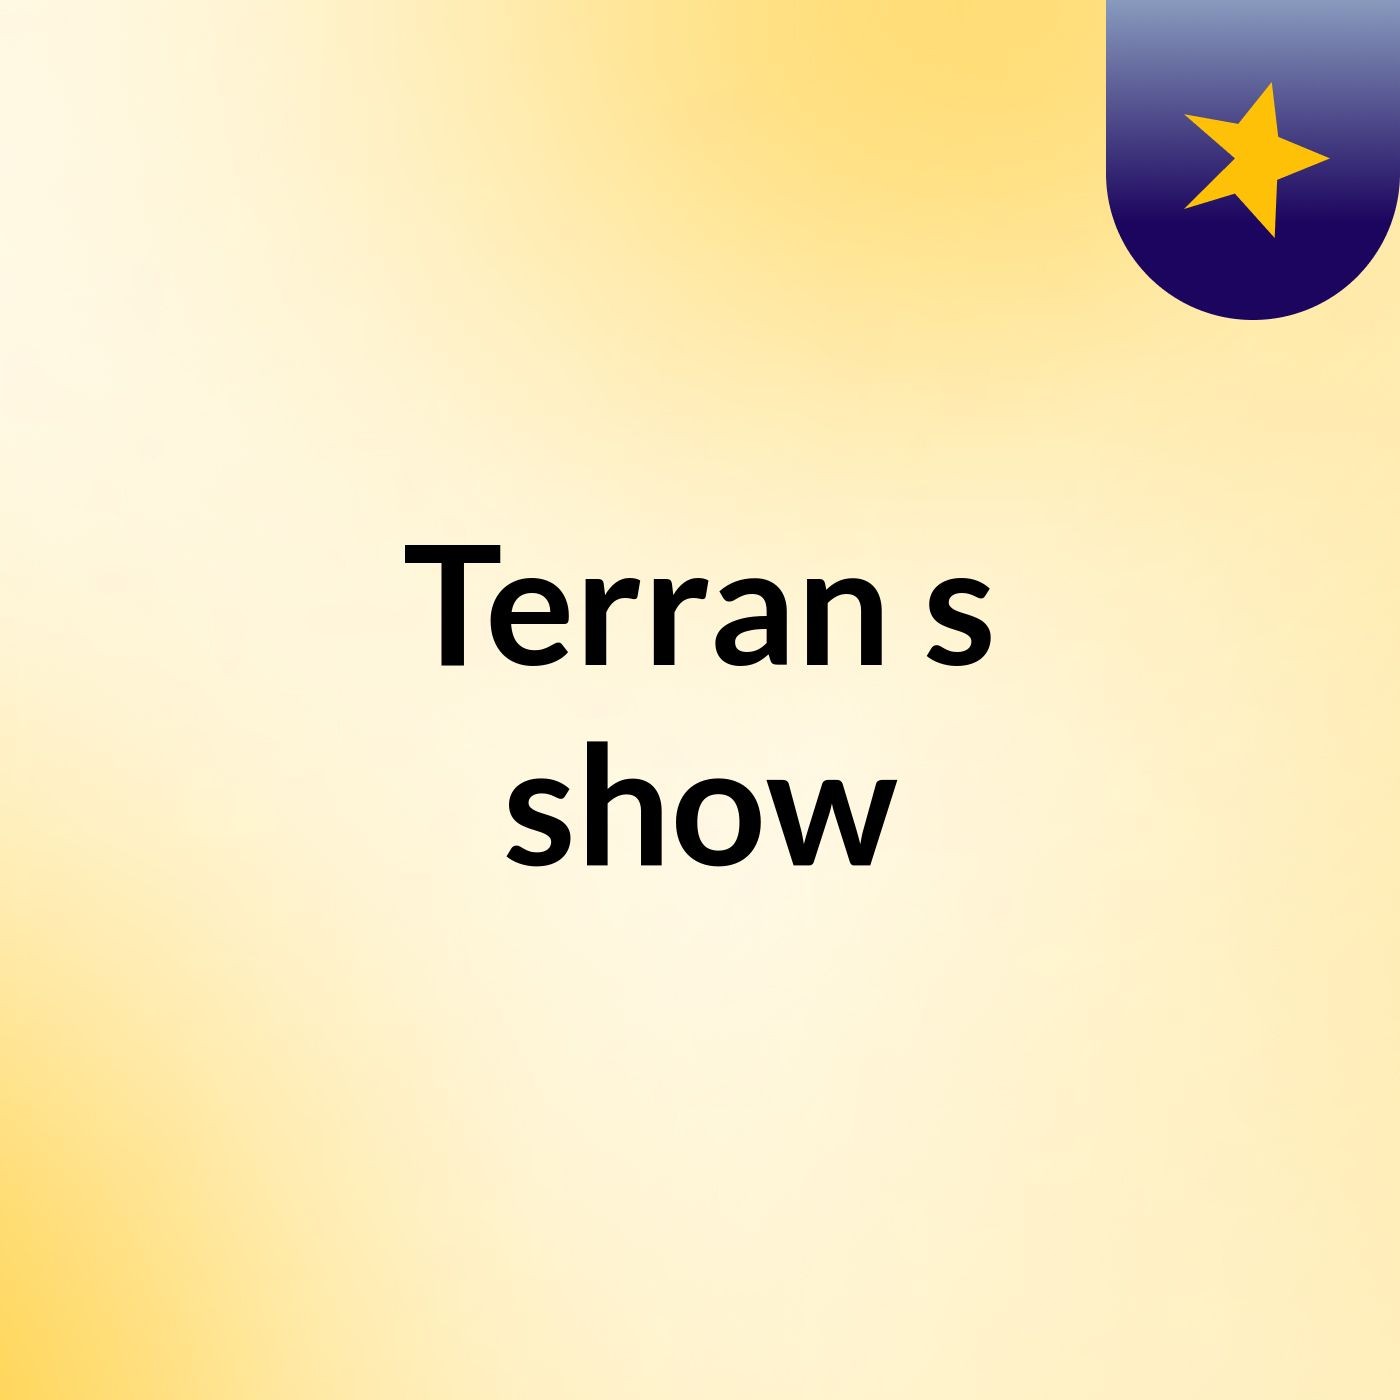 Terran's show